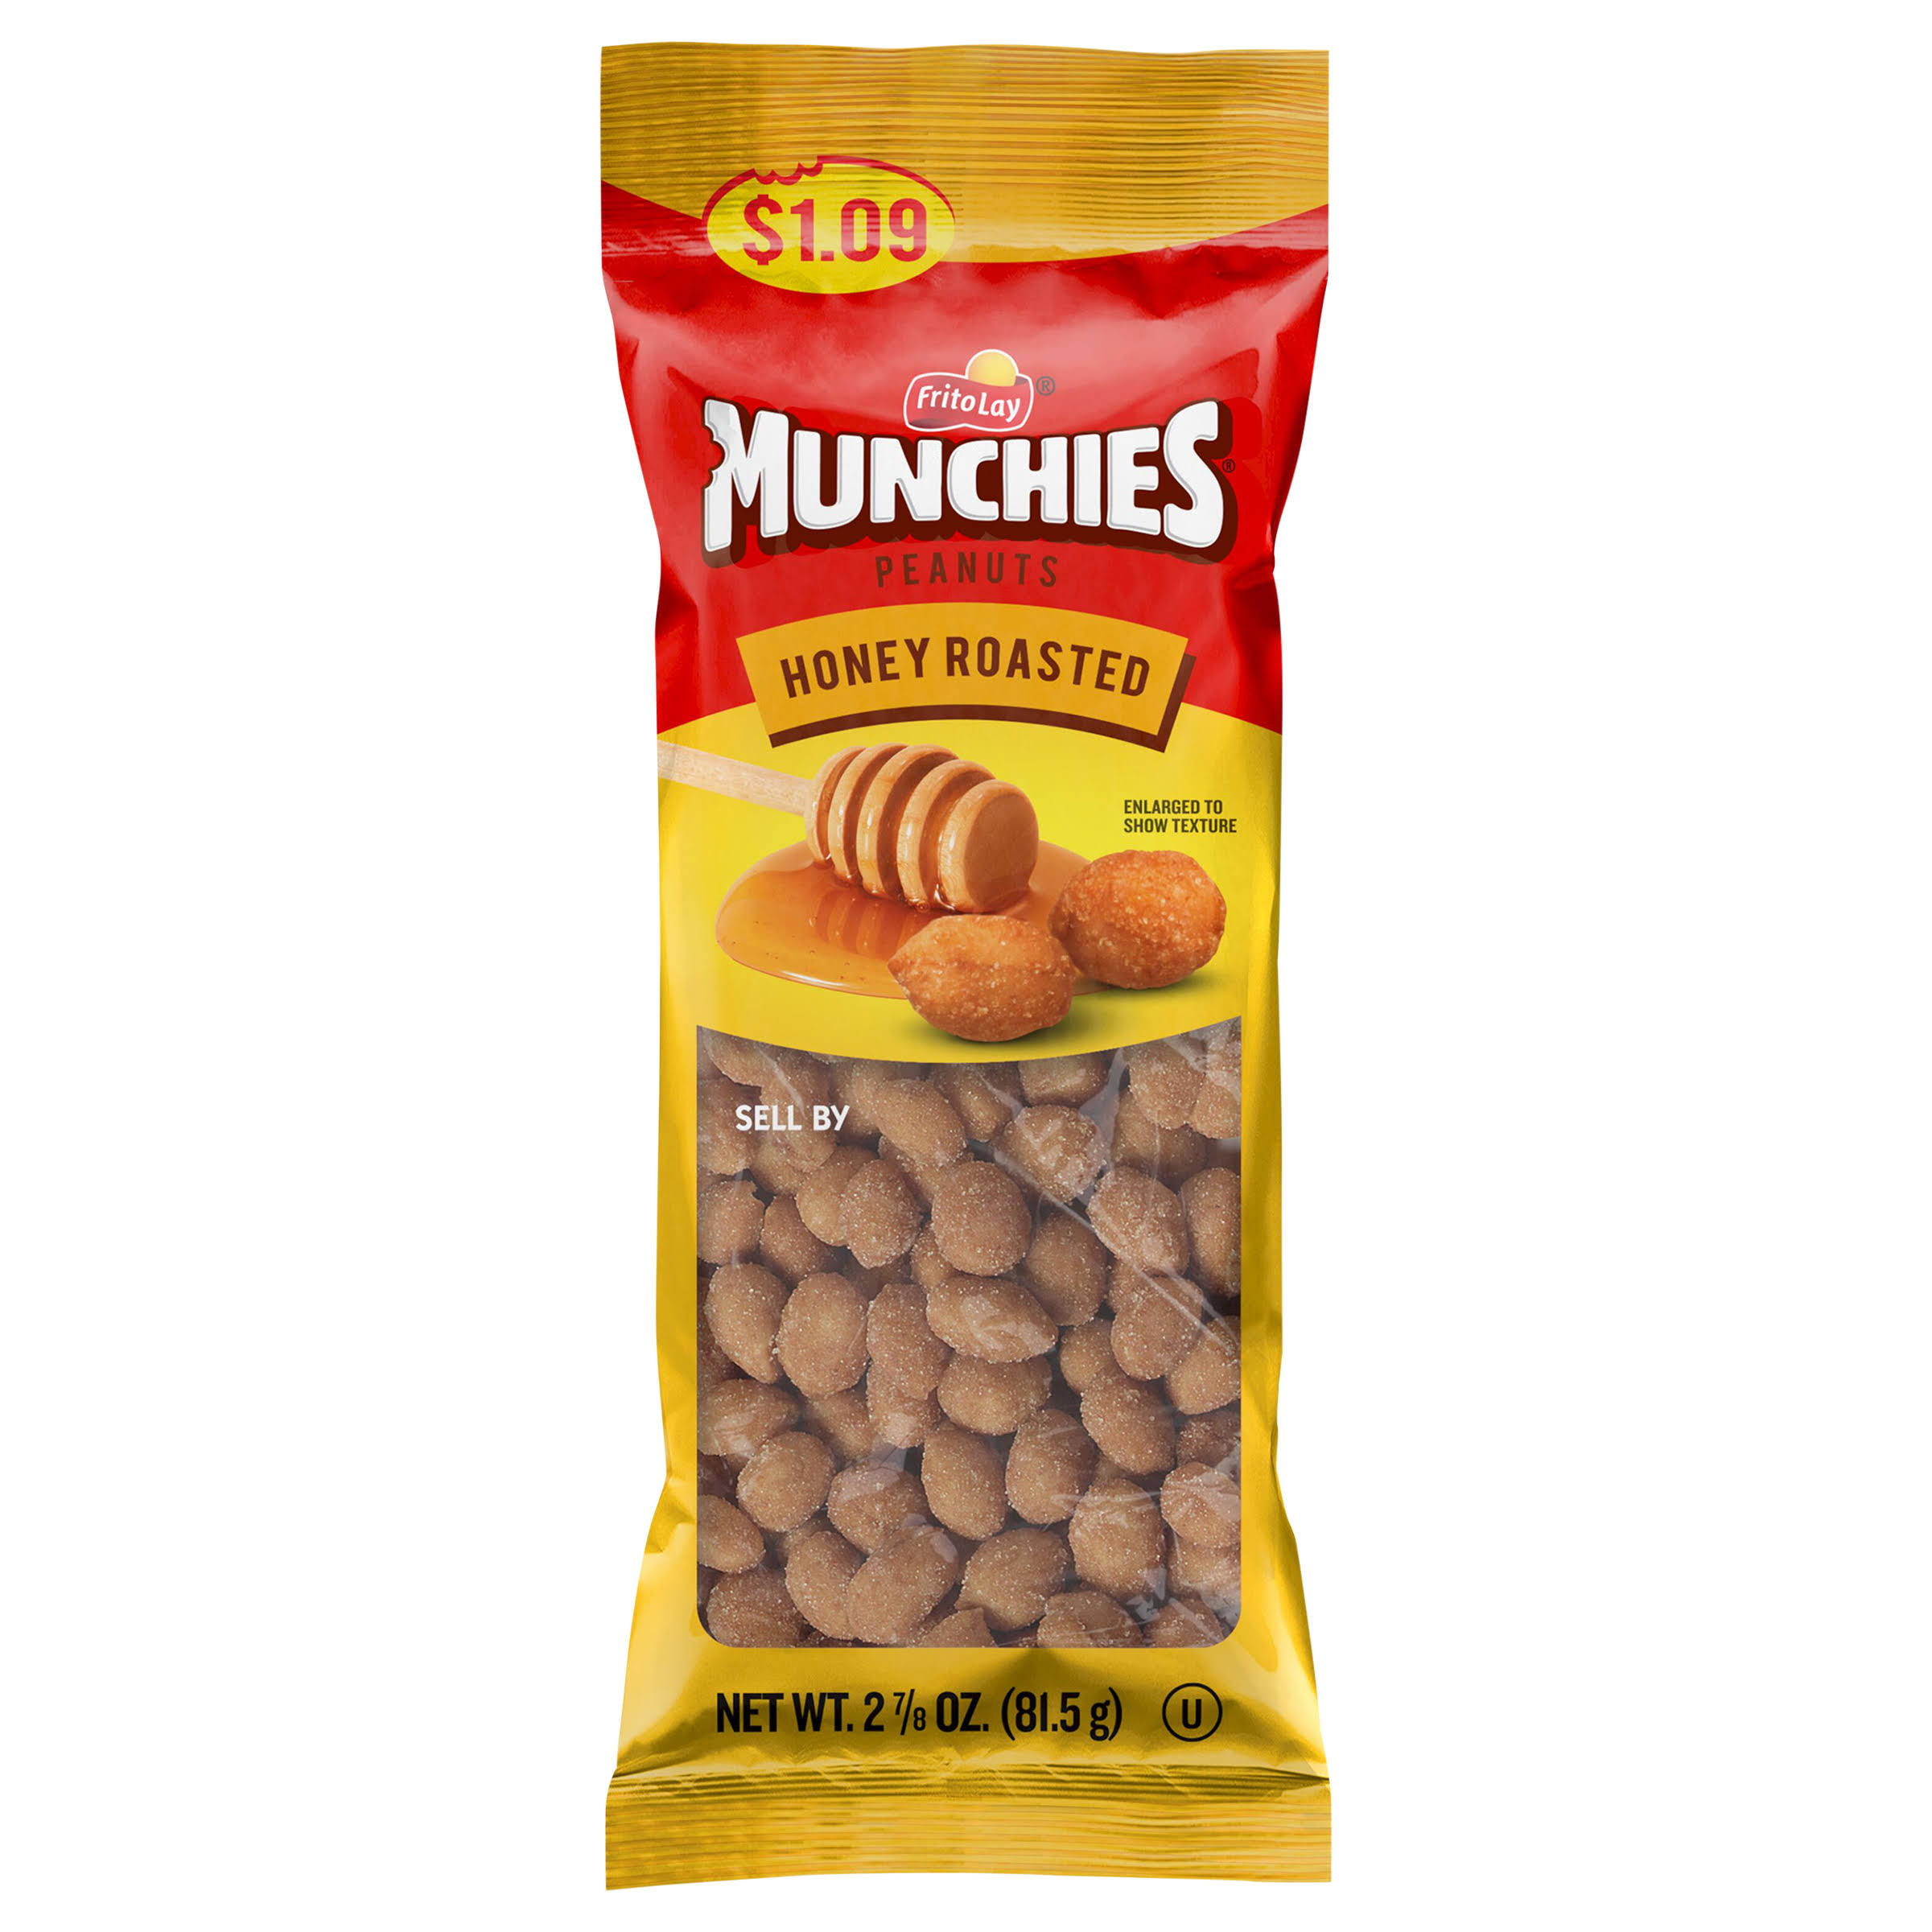 Munchies Peanuts, Honey Roasted - 2.87 oz